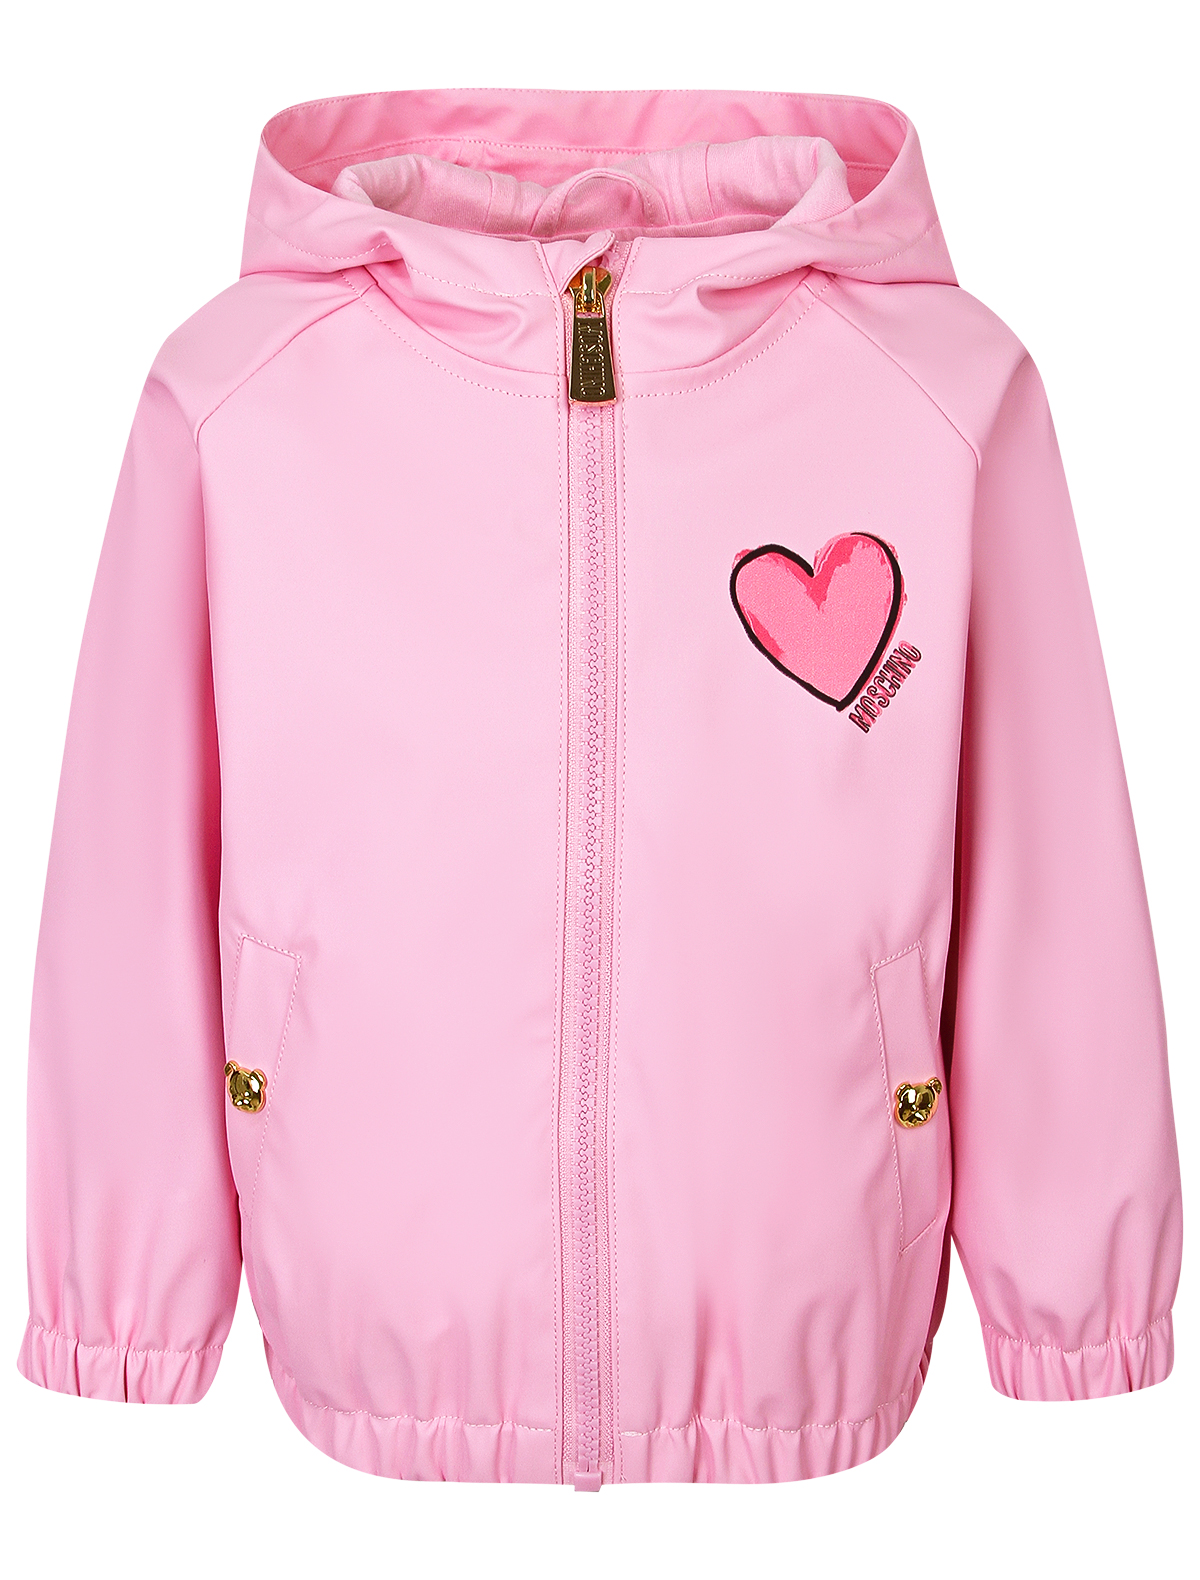 куртка moschino малыши, розовая